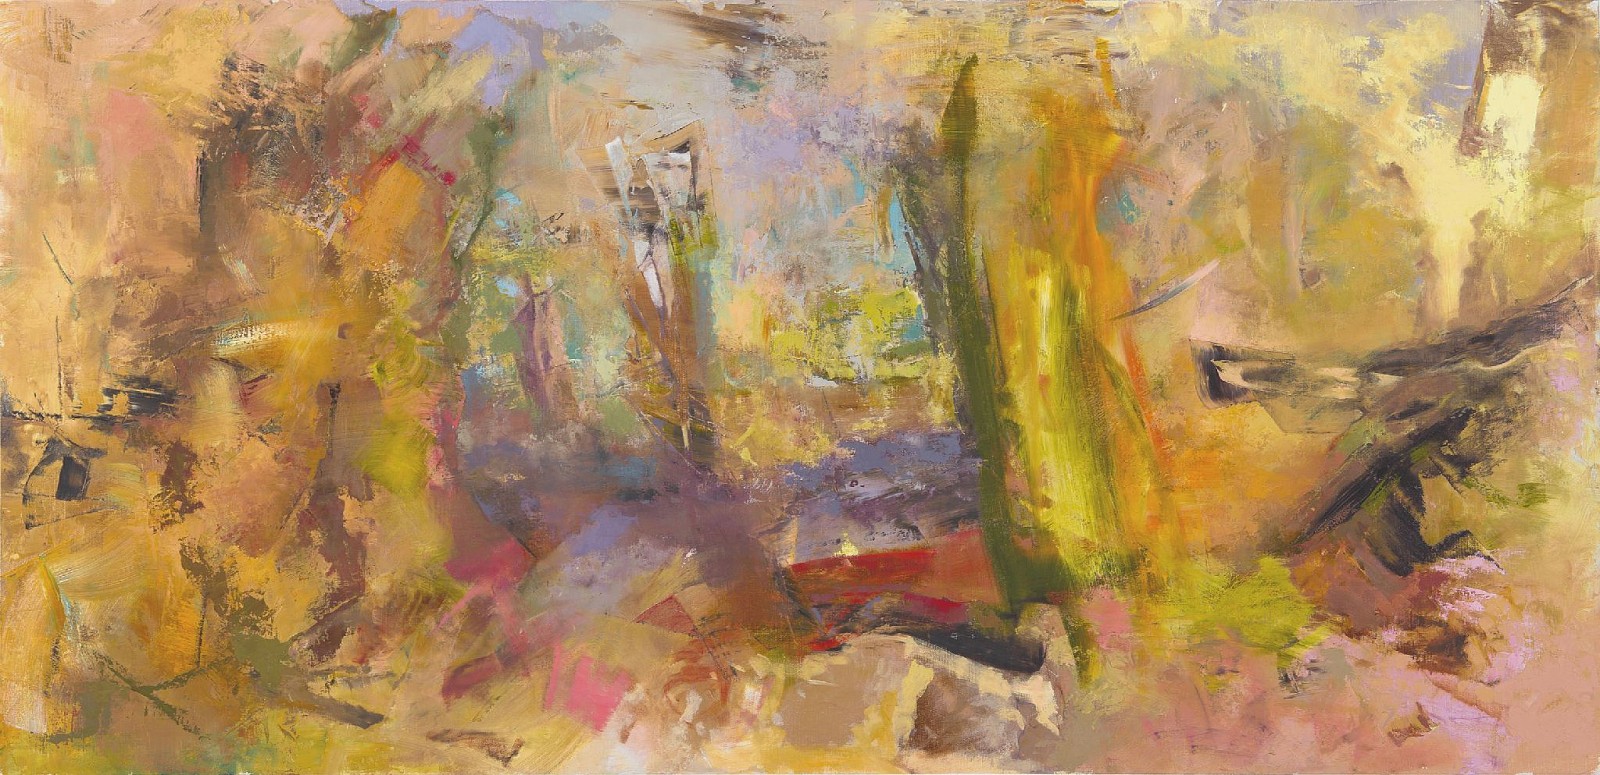 Beverly Barkat, #459
Oil on Canvas, 47 1/8 x 90 1/2 in.
BARK00014